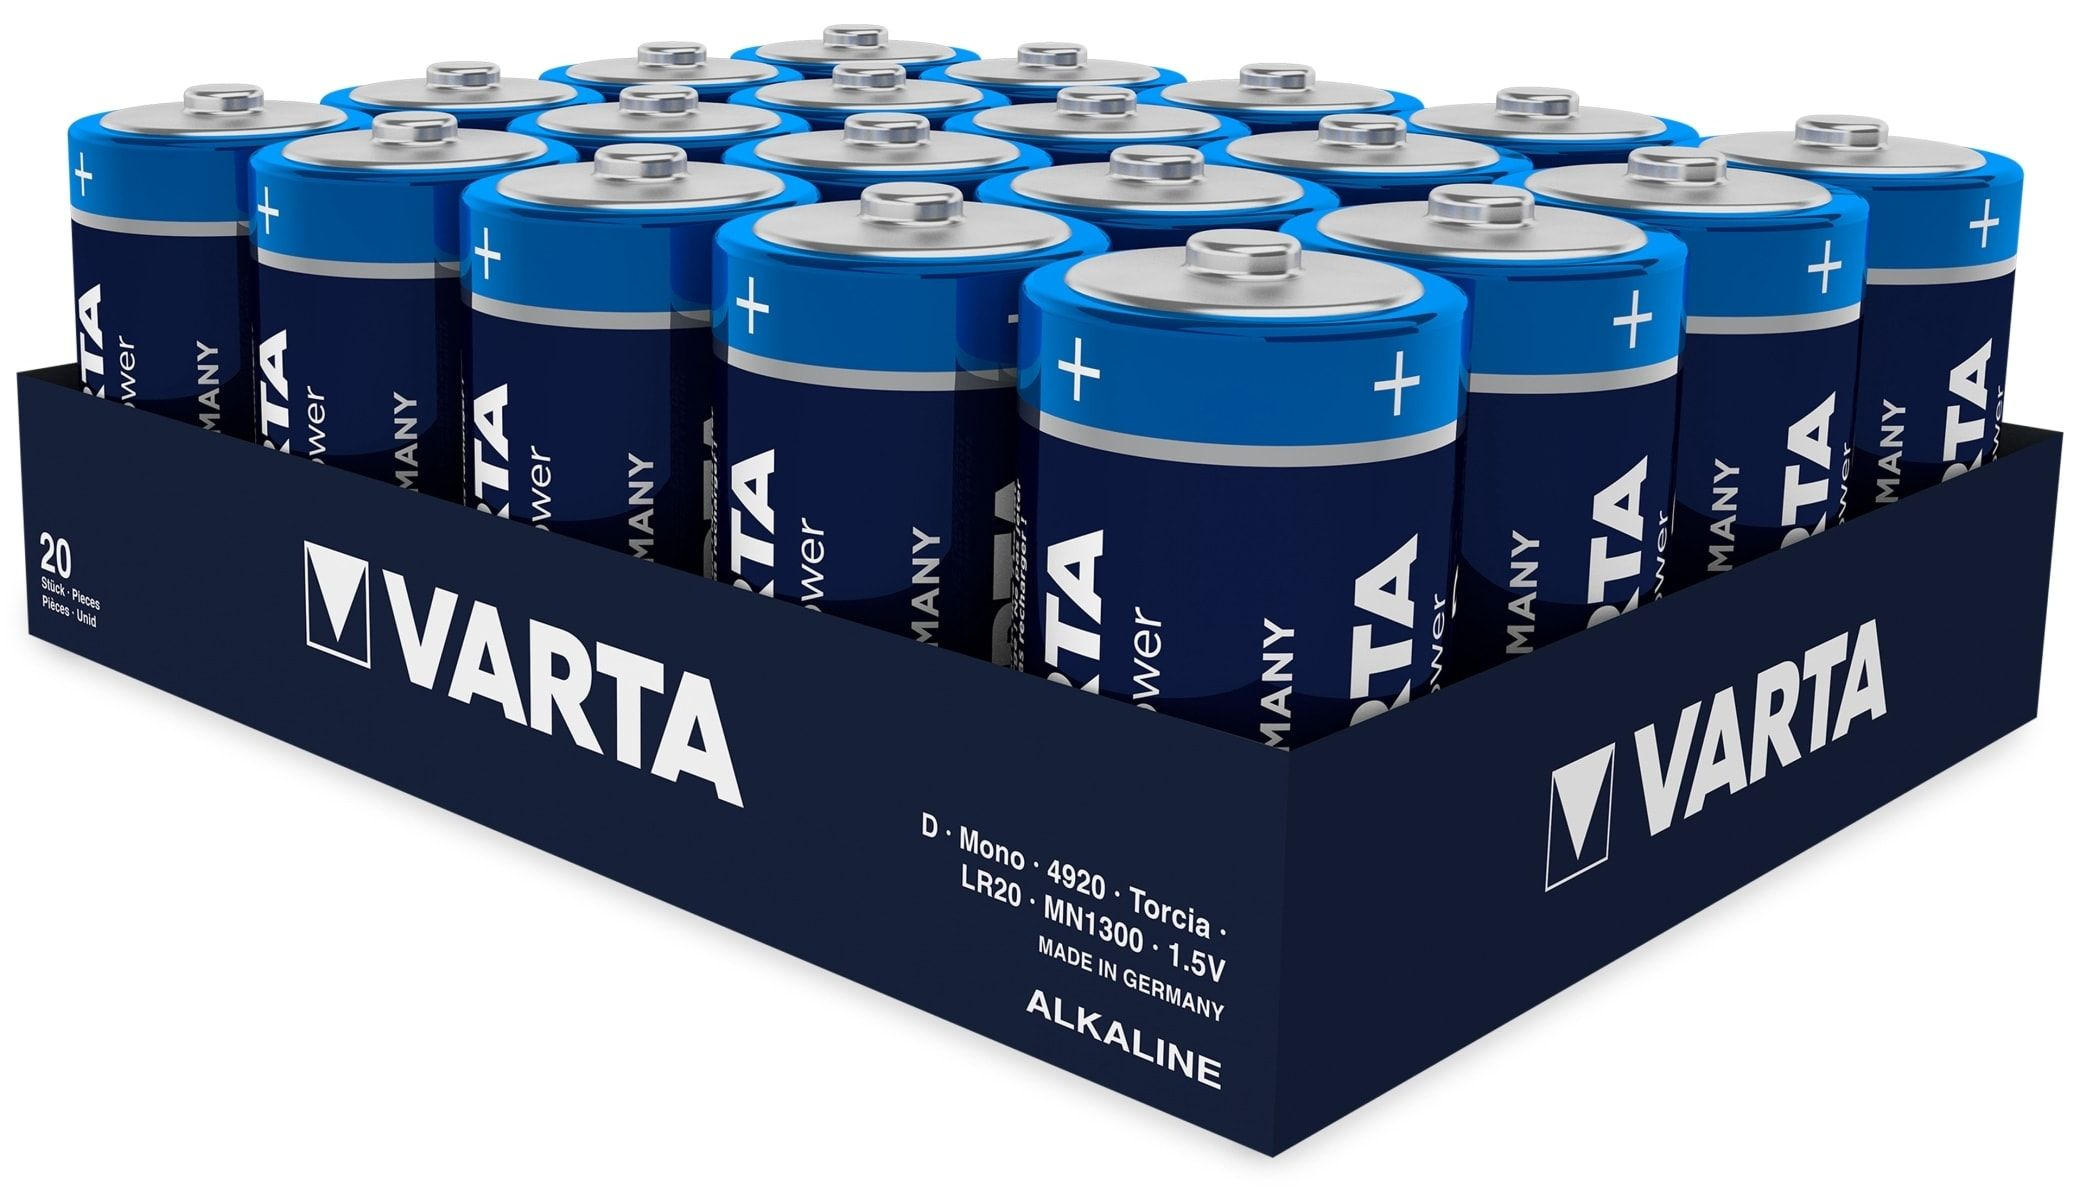 4920 Batterie, D (lose) AlMn, VARTA Volt, Longlife Ah Batterie Power LR20 16.5 AlMn 1.5 Mono